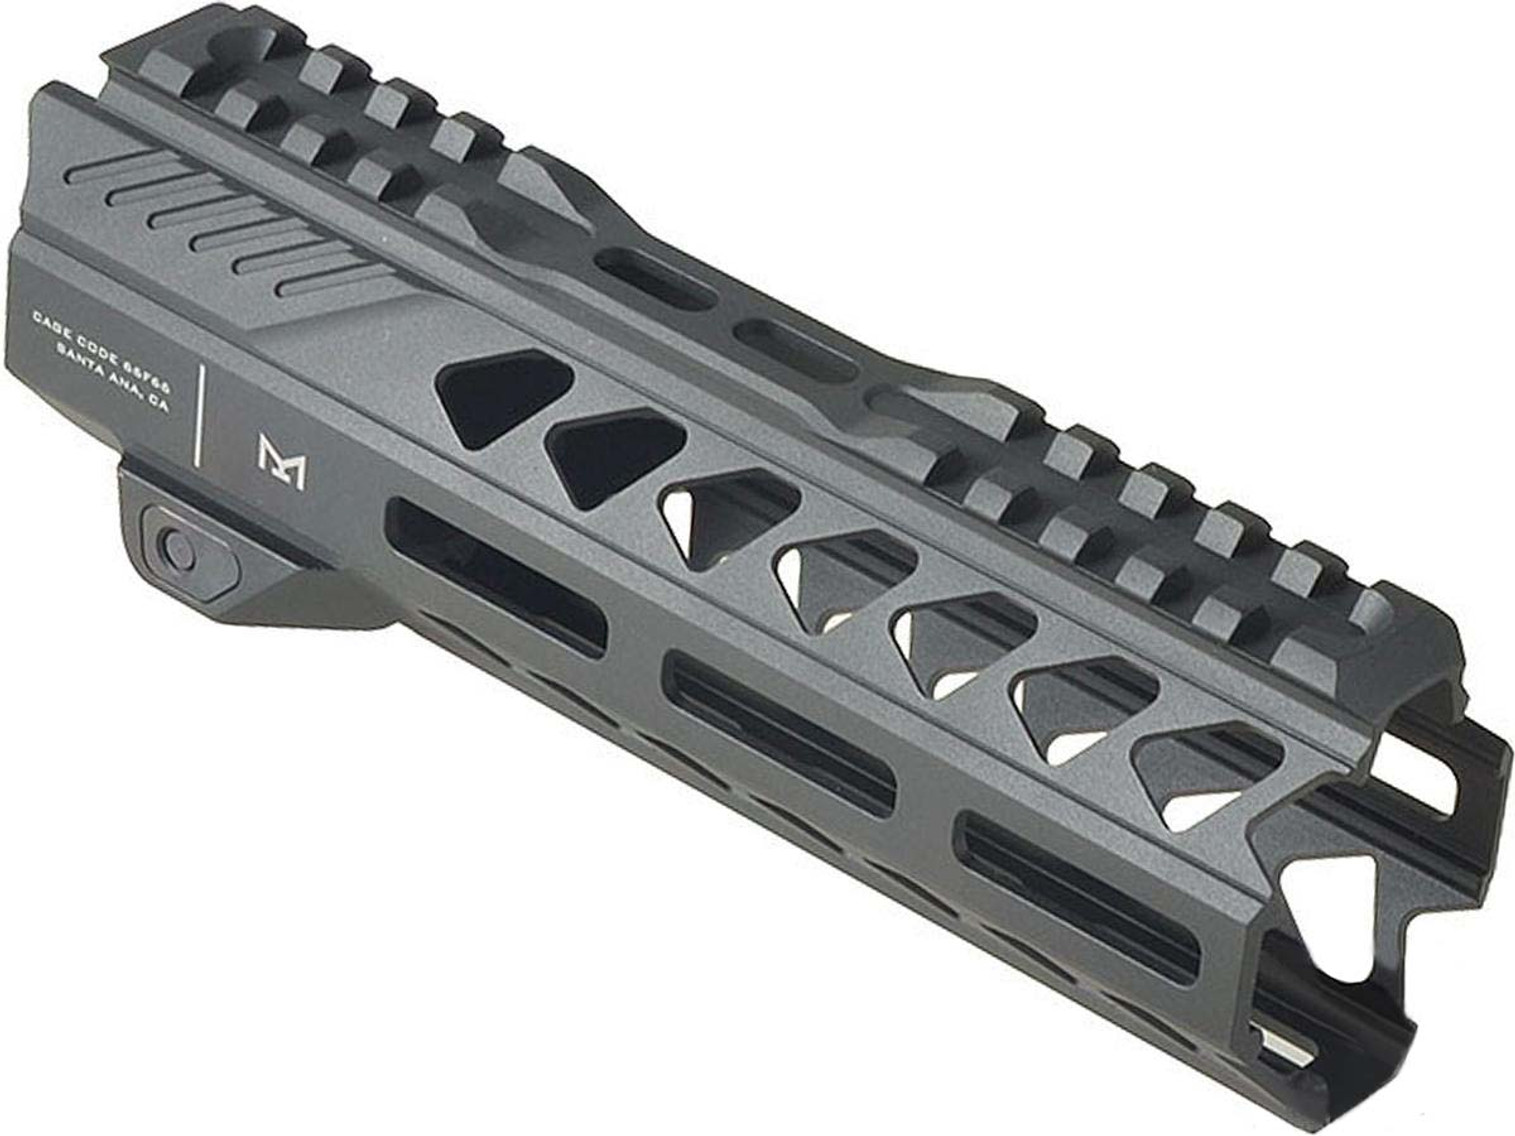 Strike Industries "Strike Rail" MLOK Free Float Aluminum Handguard for AR15 Rifles (Color: Black)